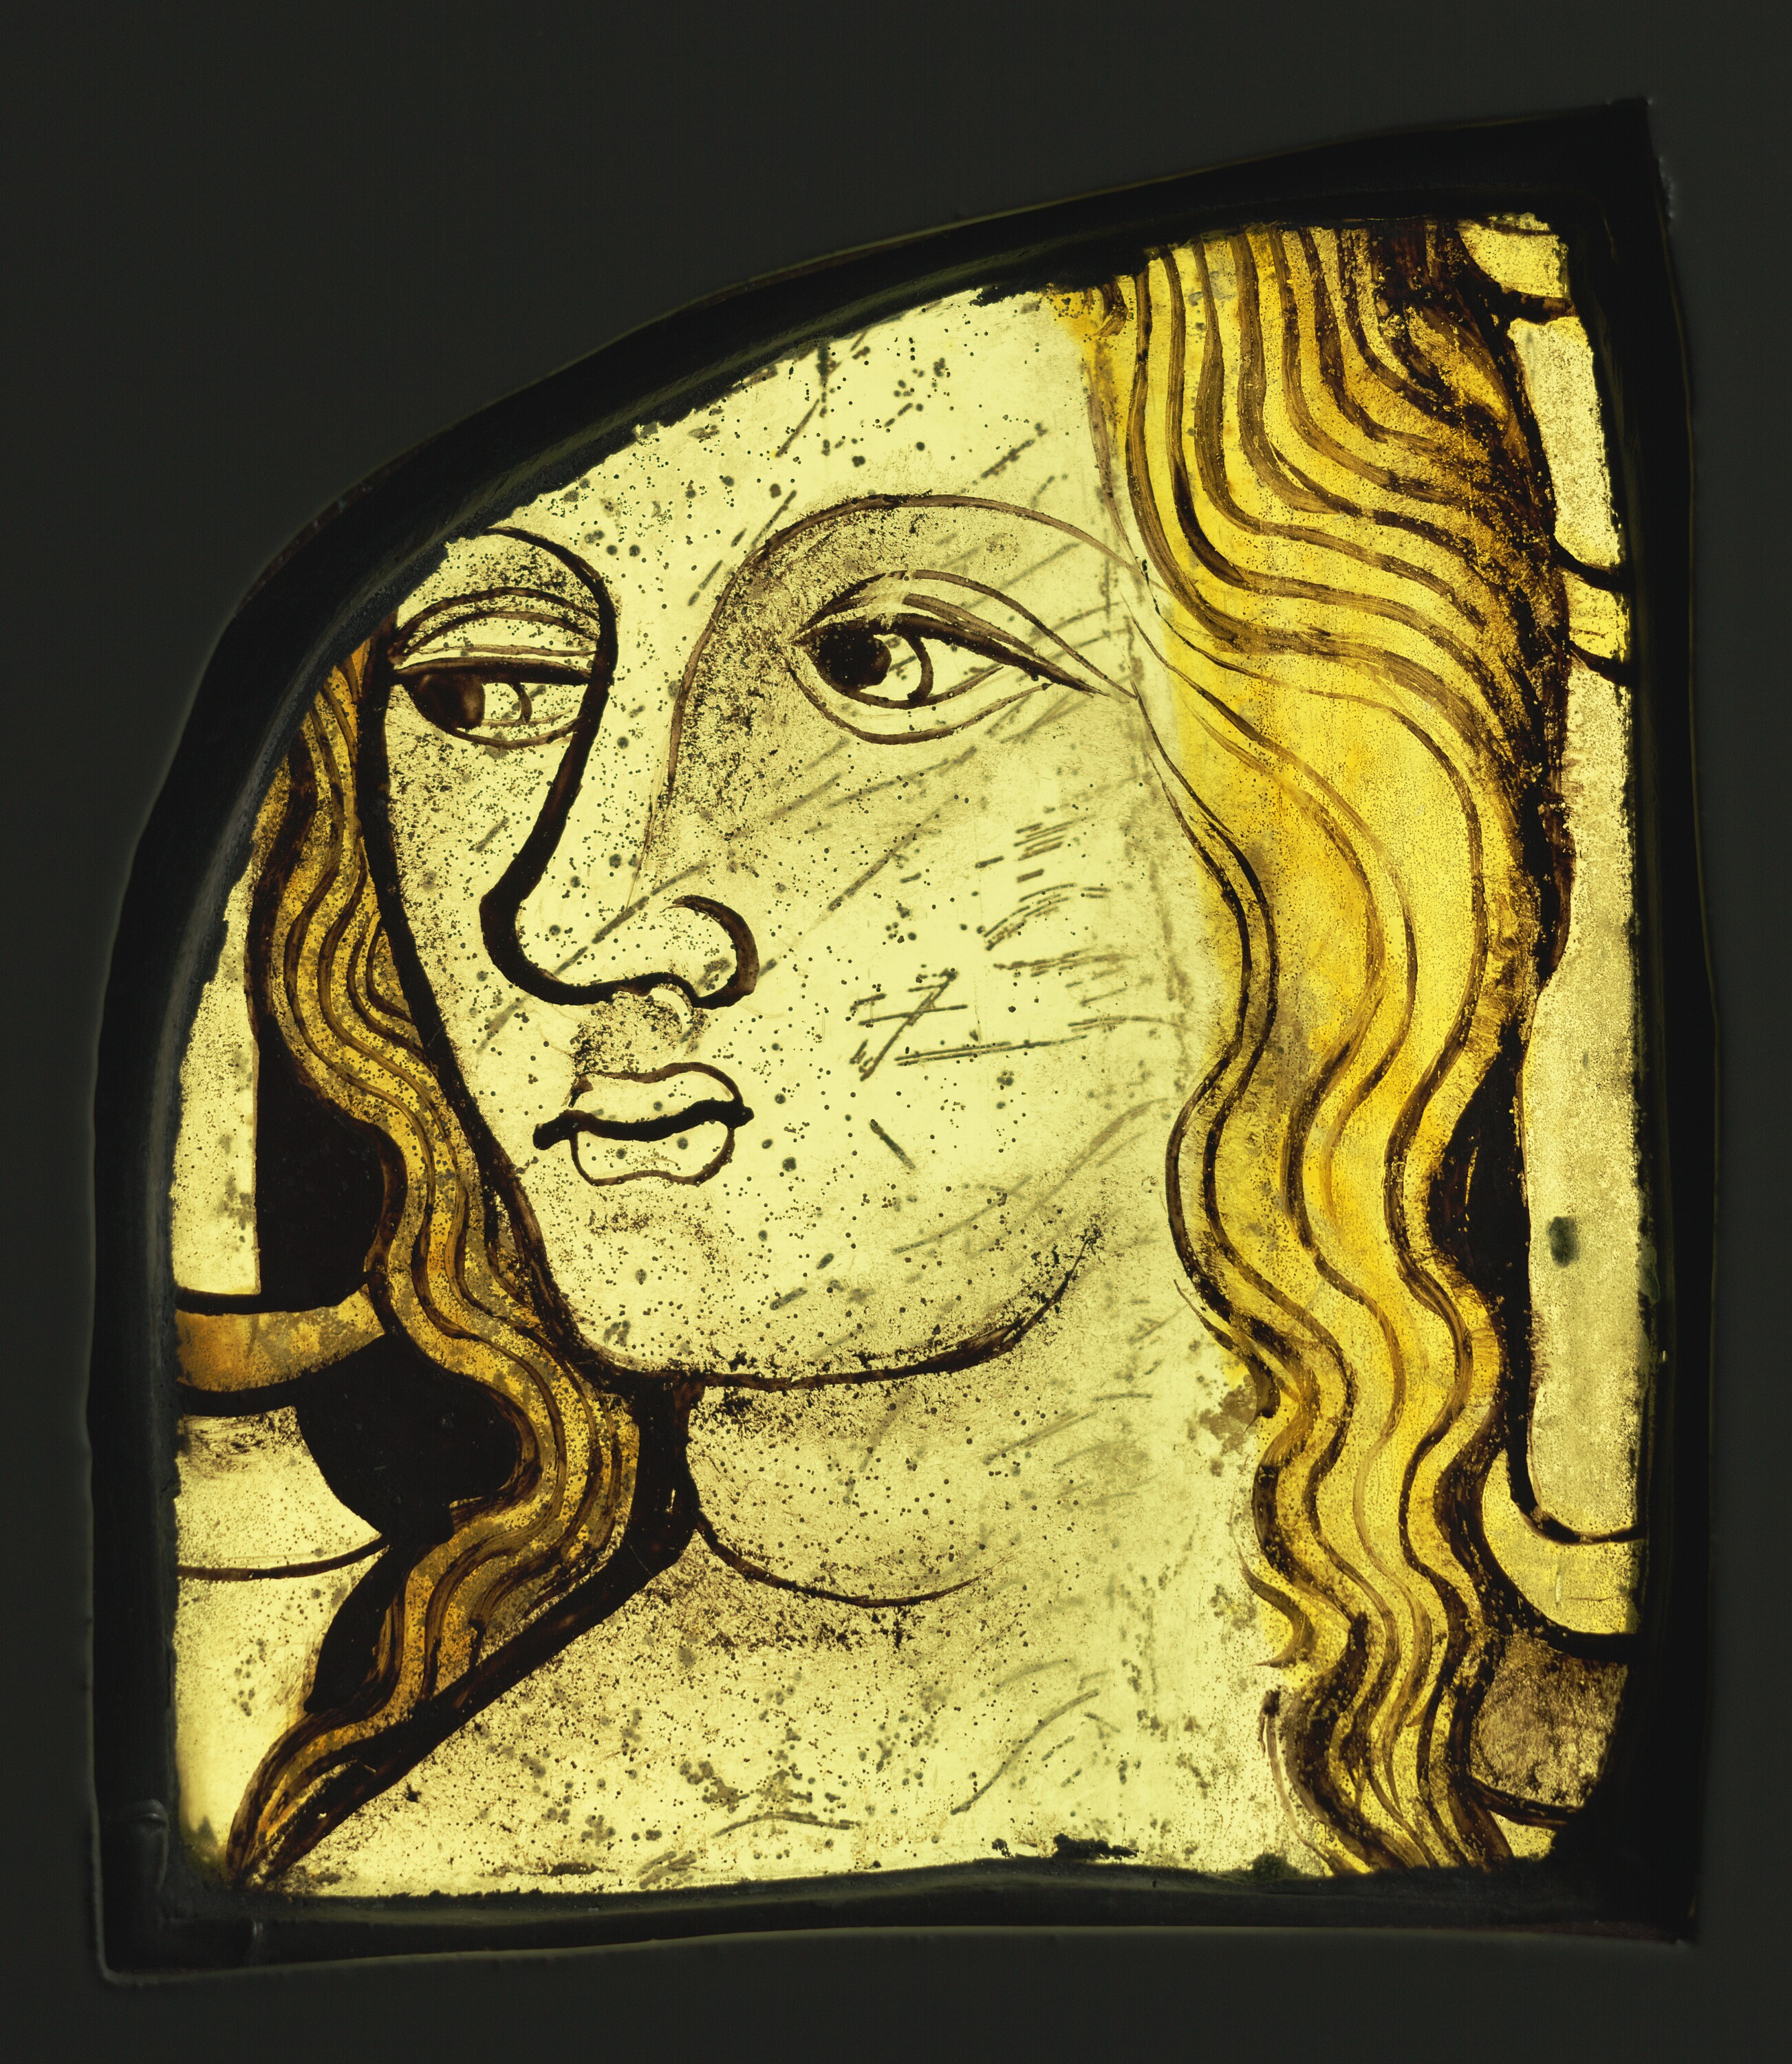 Cabeza femenina by Artista anónimo  - c. 1420-1430 - 15.4 x 11.9 x 1 cm Museo J. Paul Getty